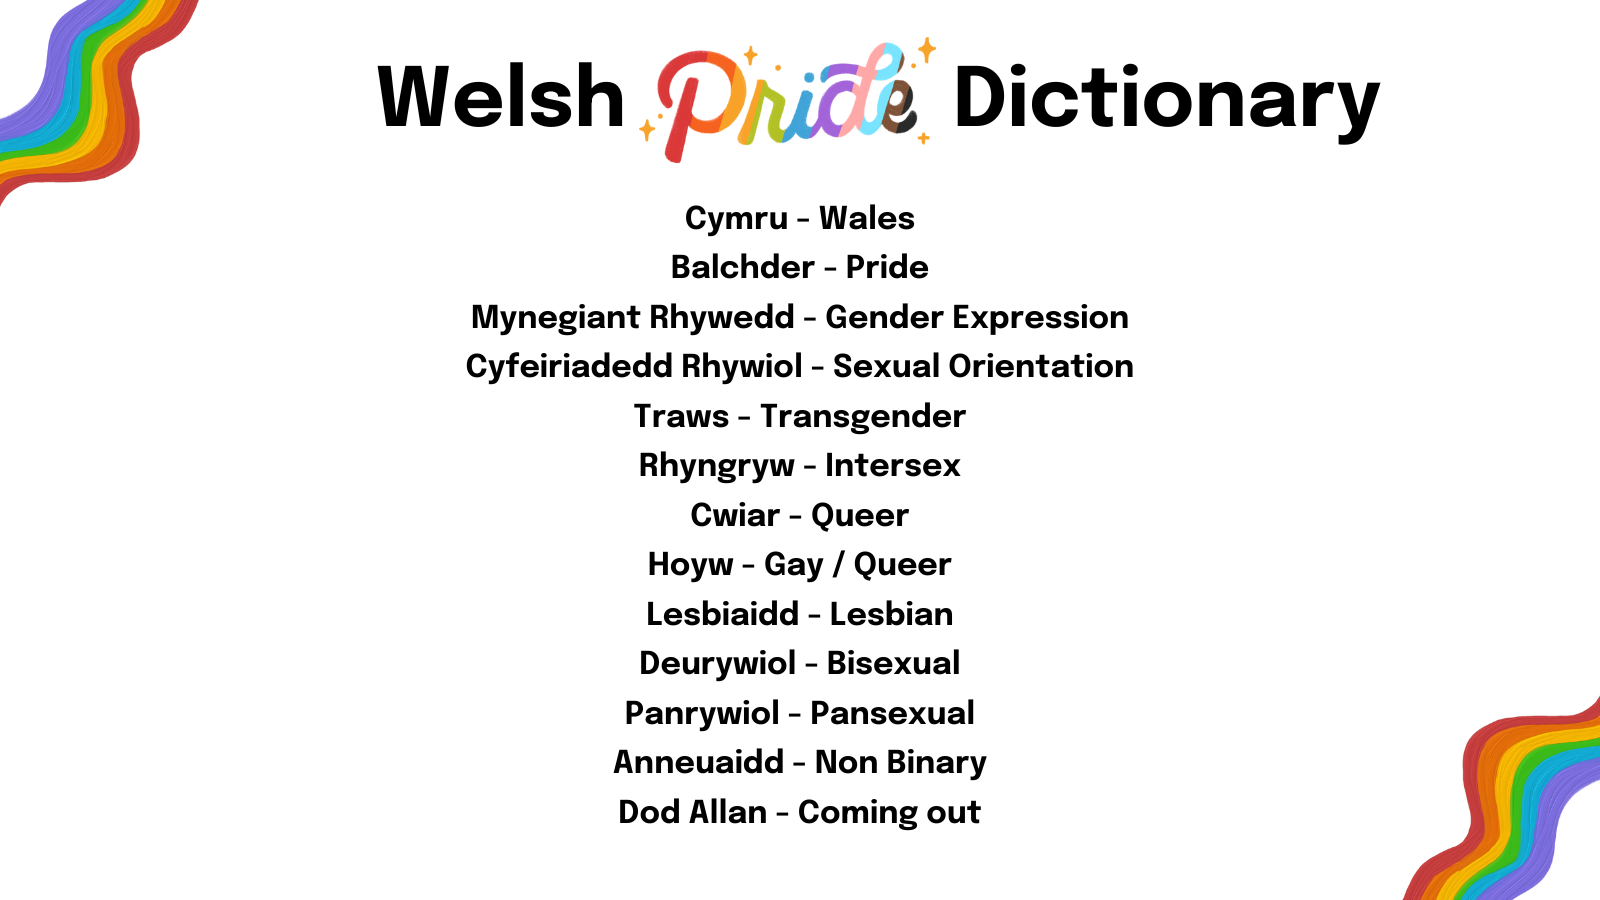 Welsh pride glossary